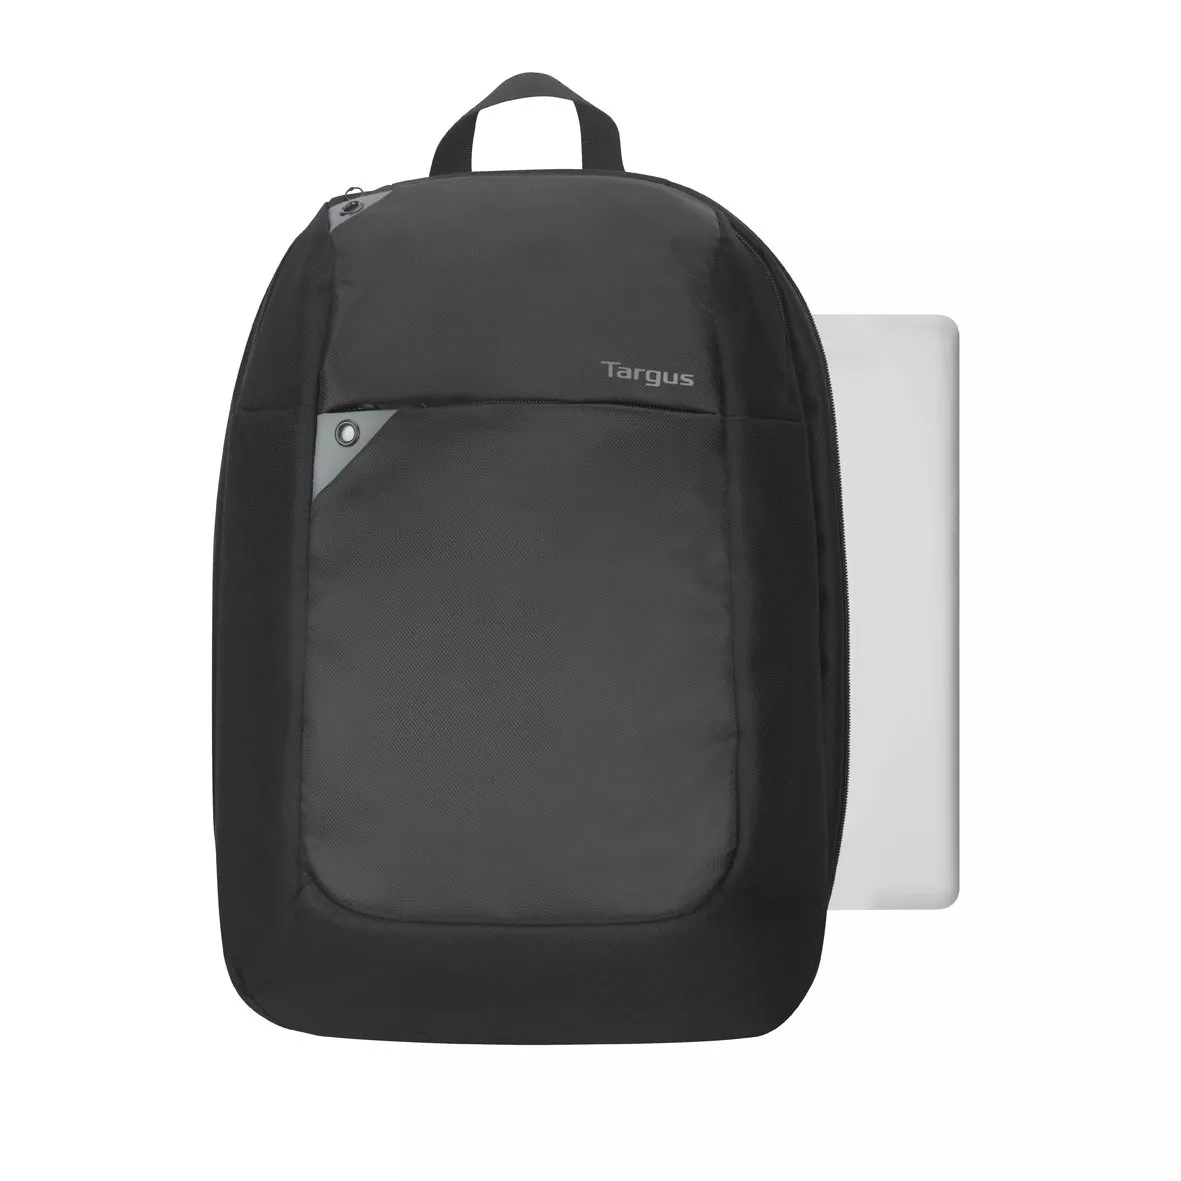 Vente TARGUS Intellect 15.6inch Backpack Targus au meilleur prix - visuel 2